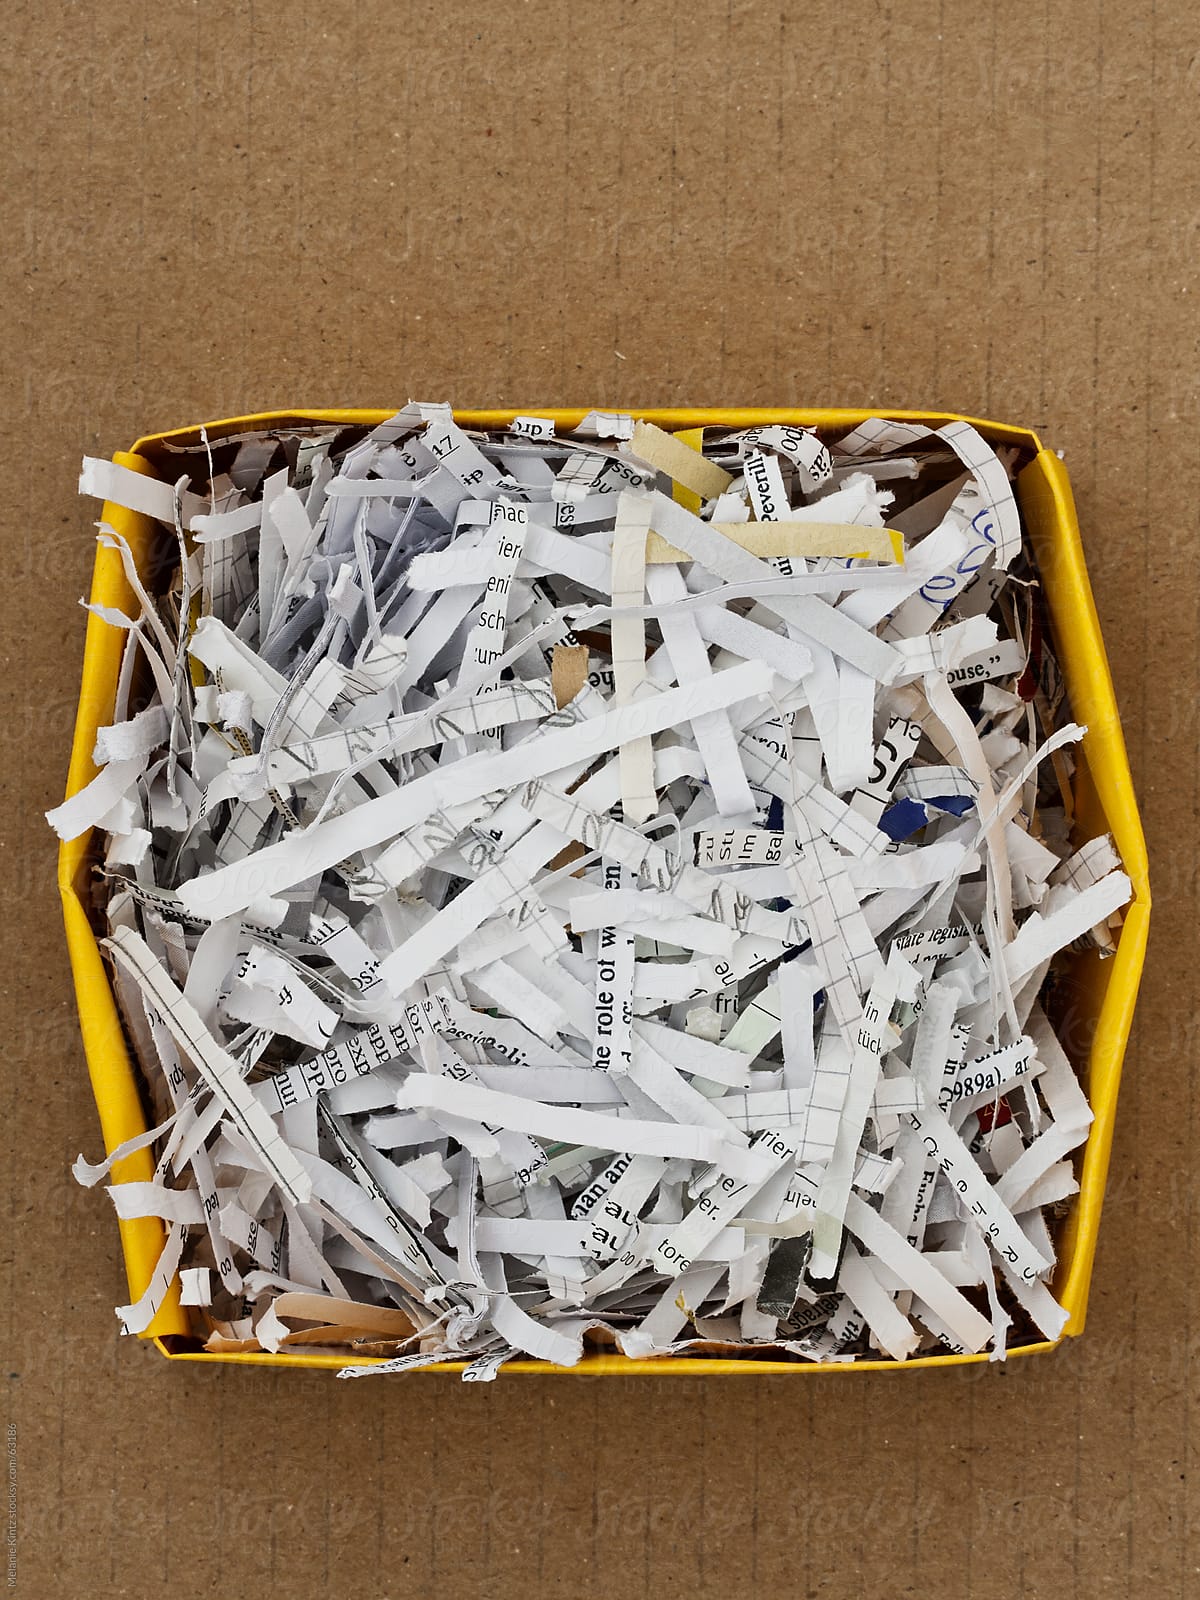 Shredded paper in a box on cardboard